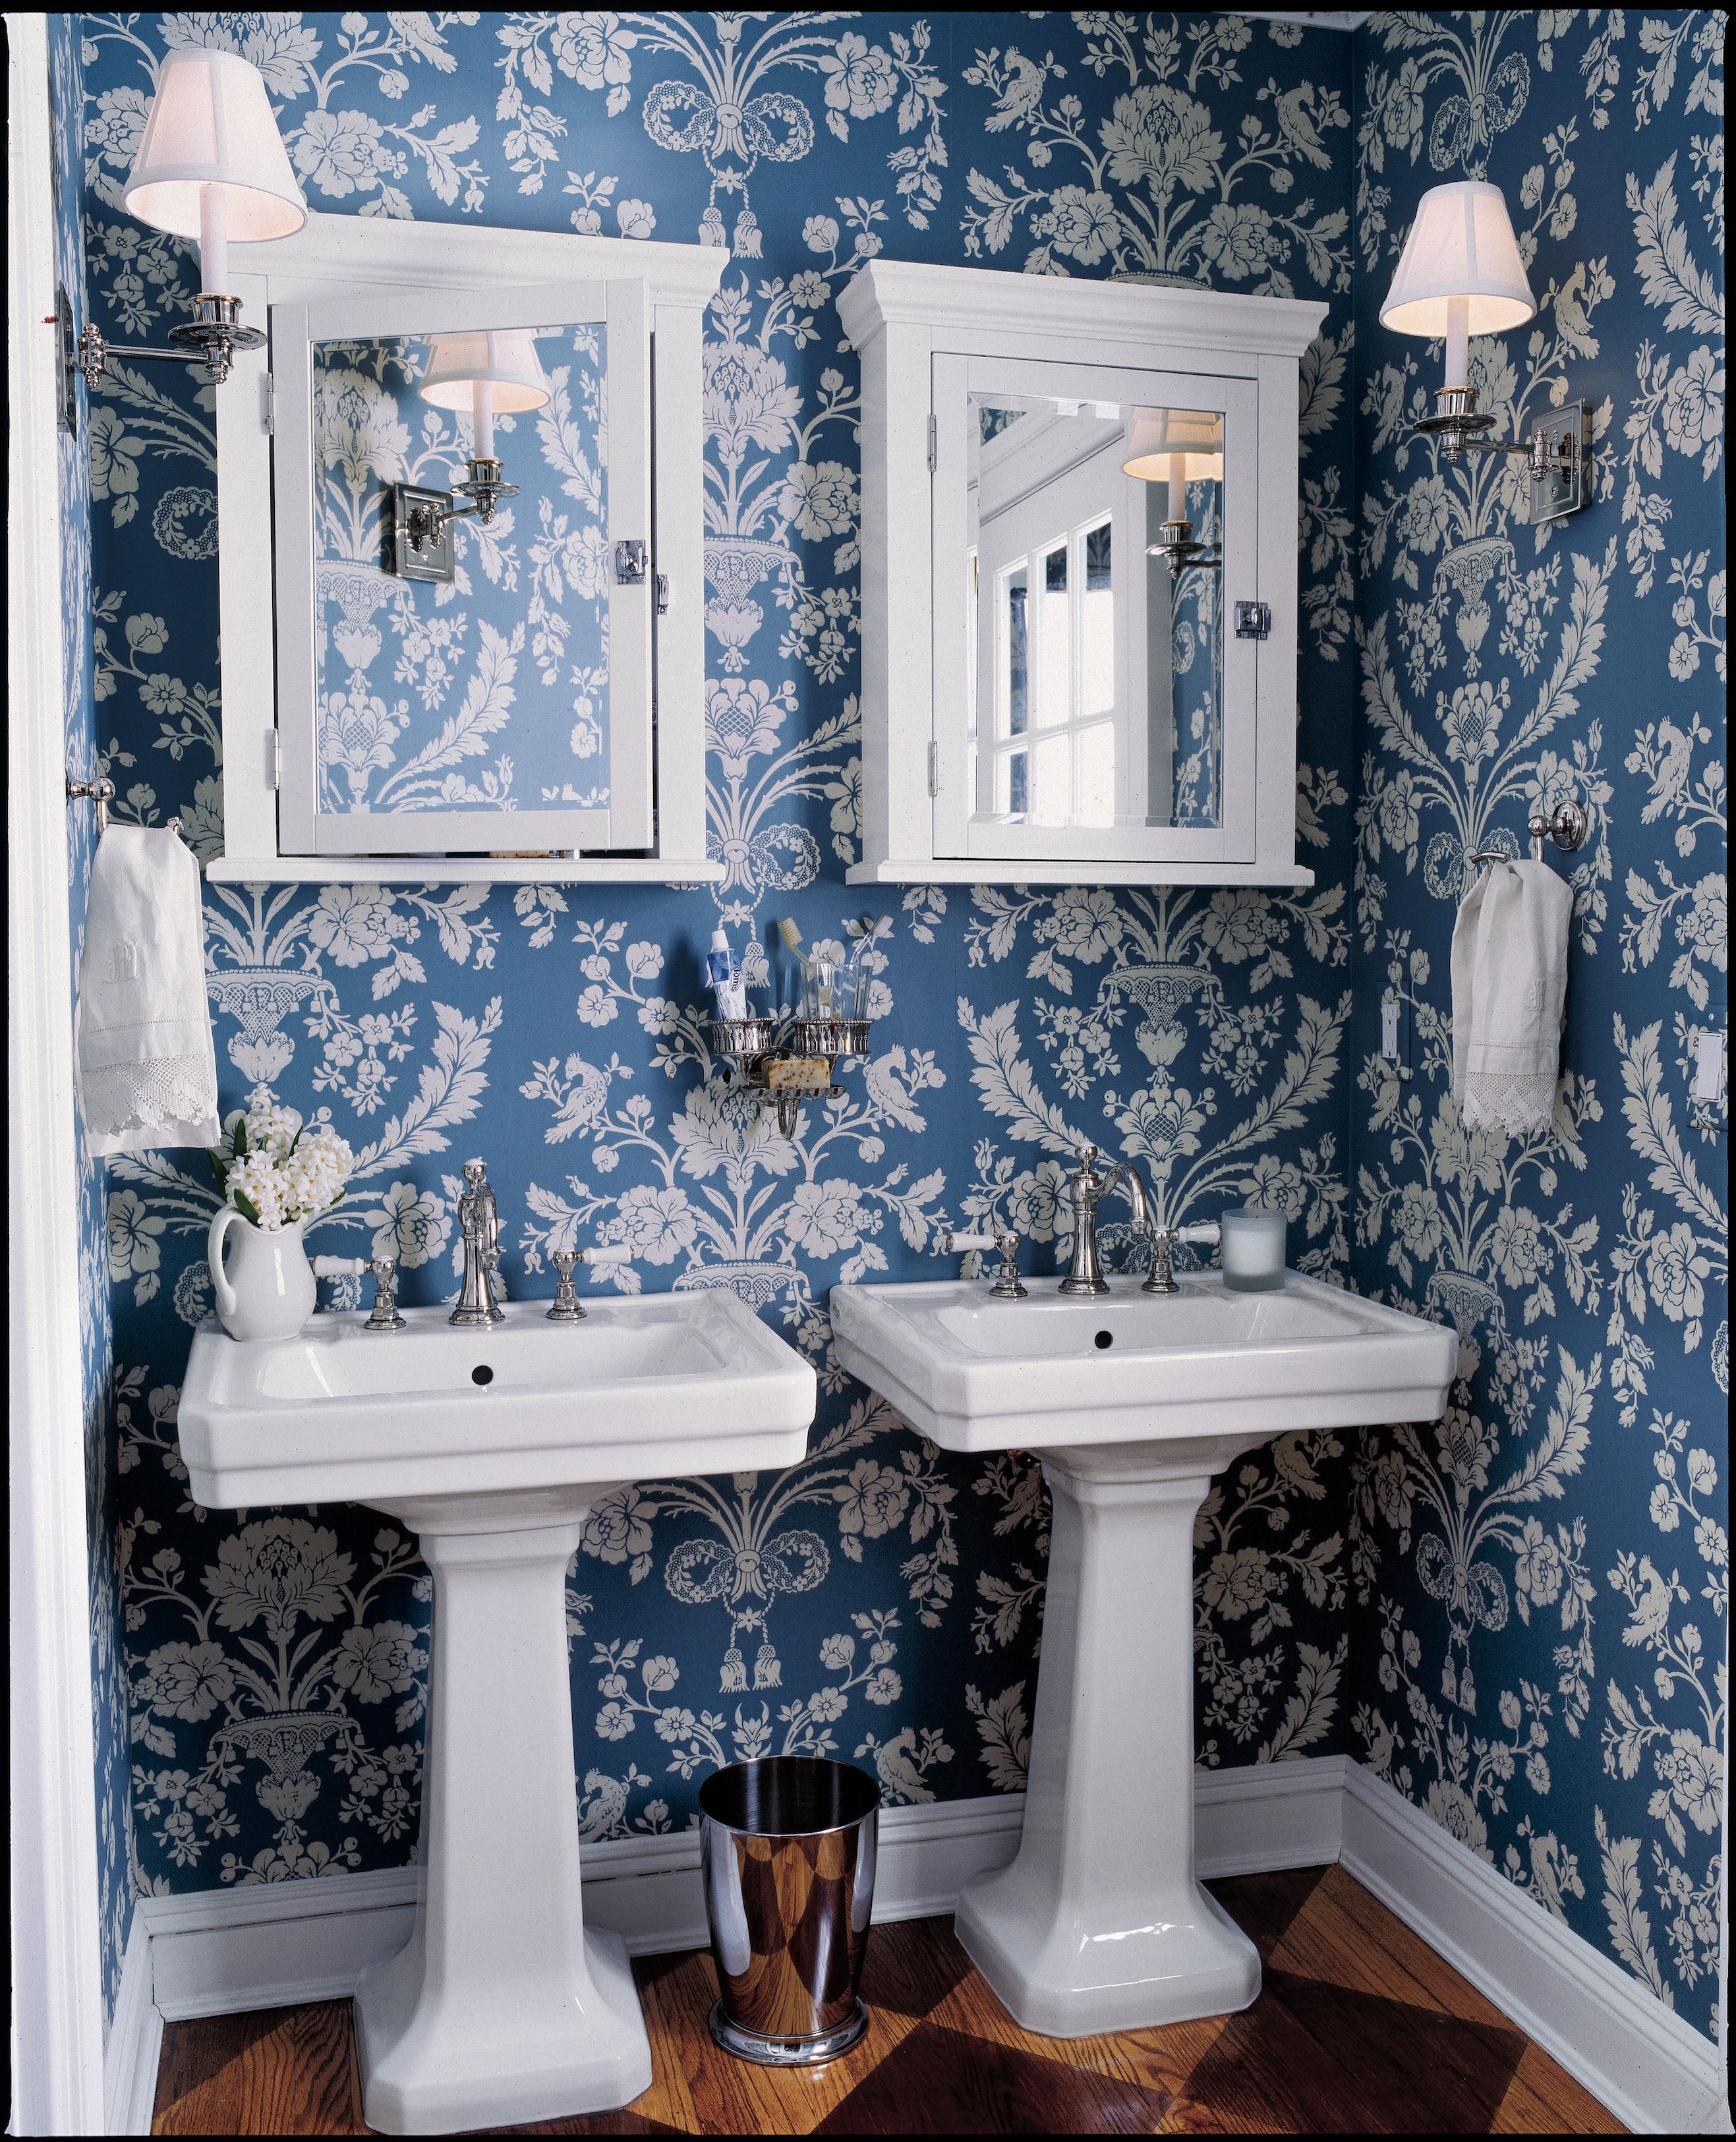 View Bathroom Wallpaper Ideas Uk Pictures - beadsbuttonsandirds